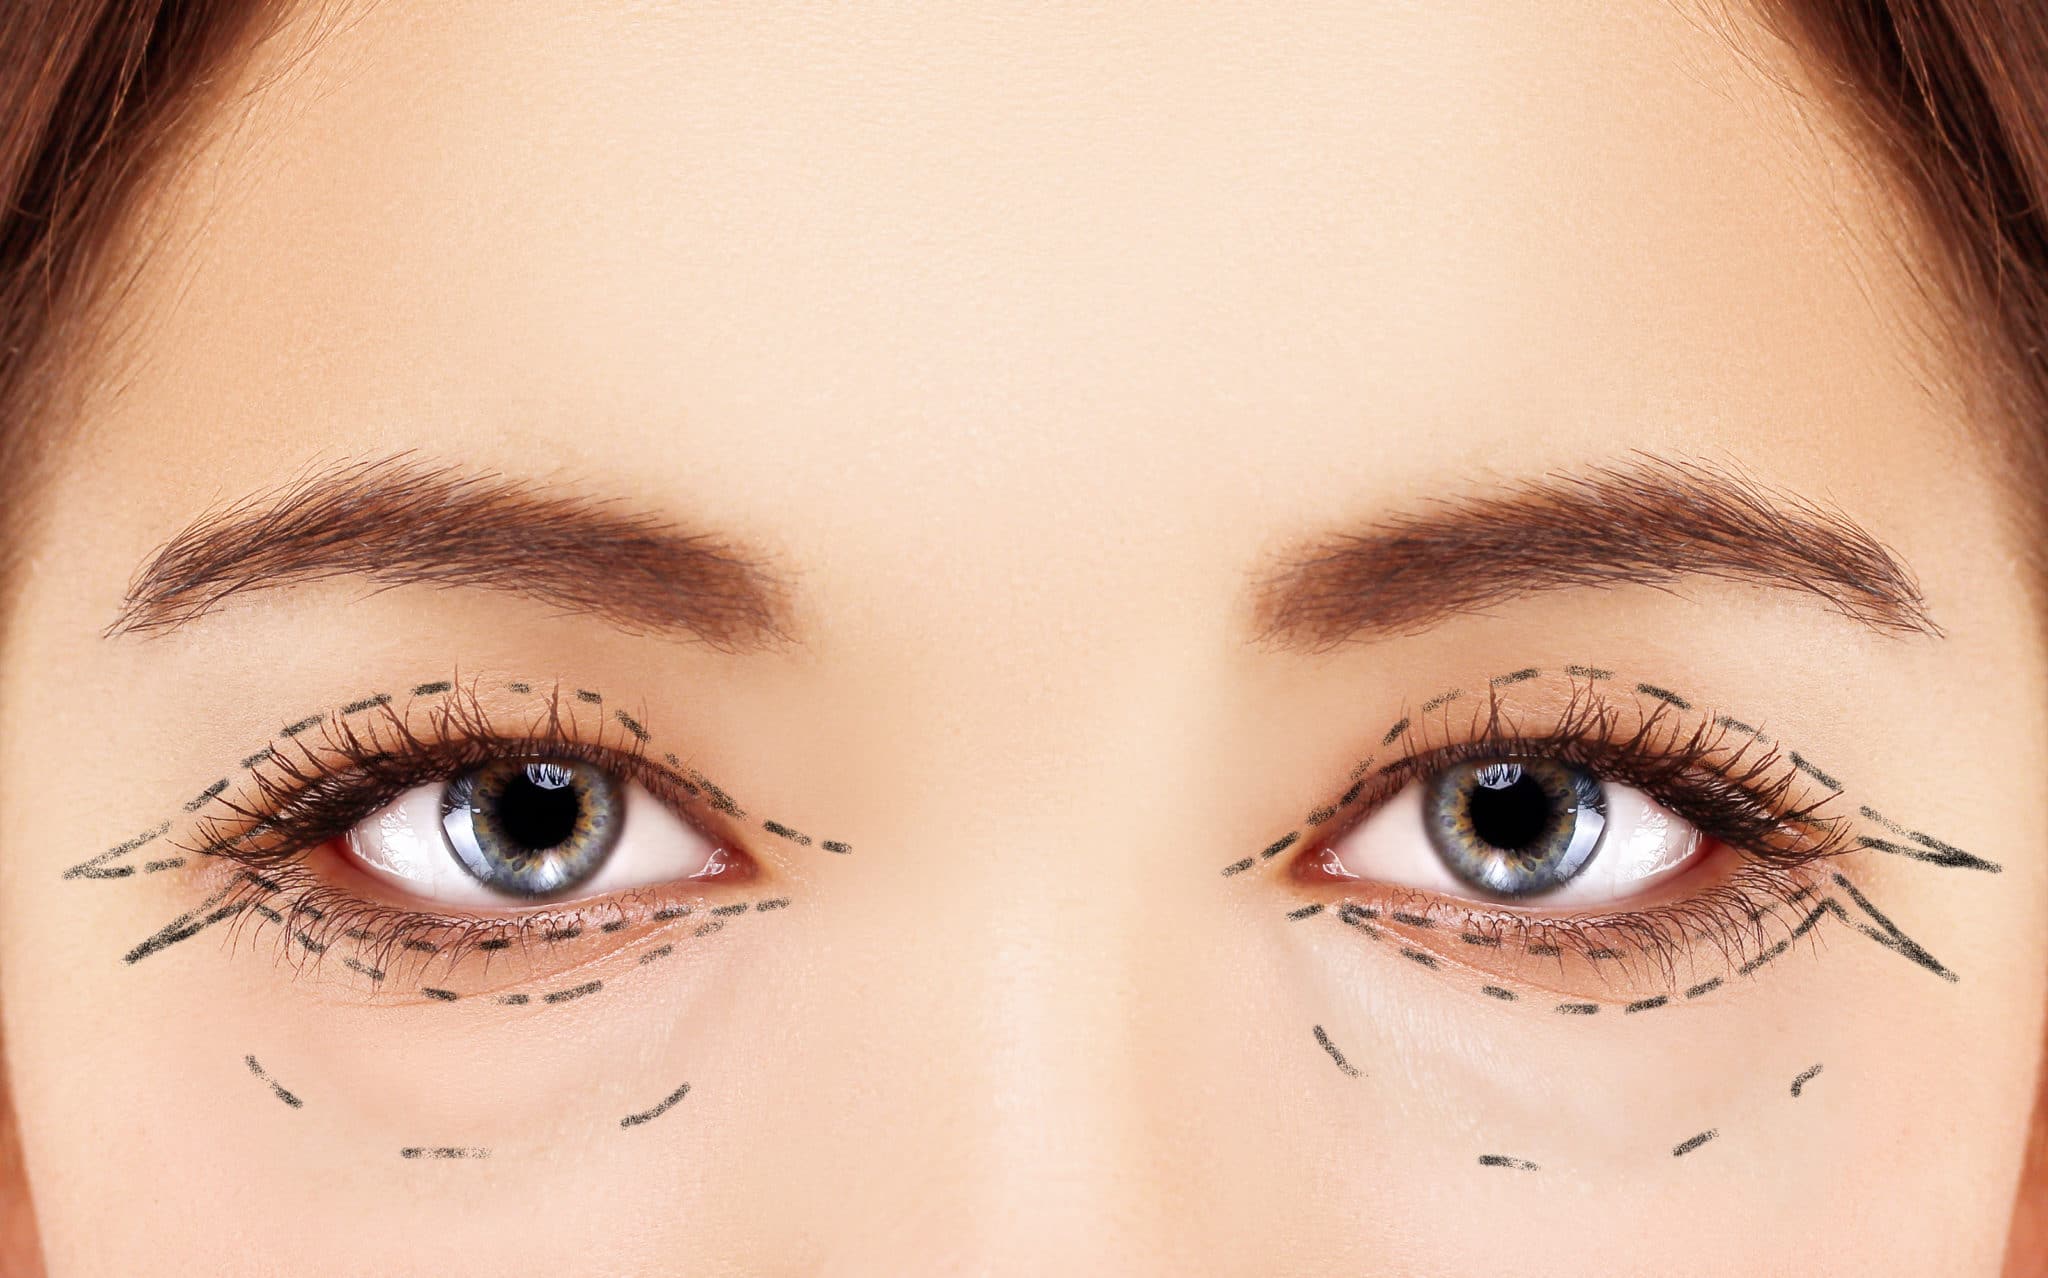 double eyelid surgery risks